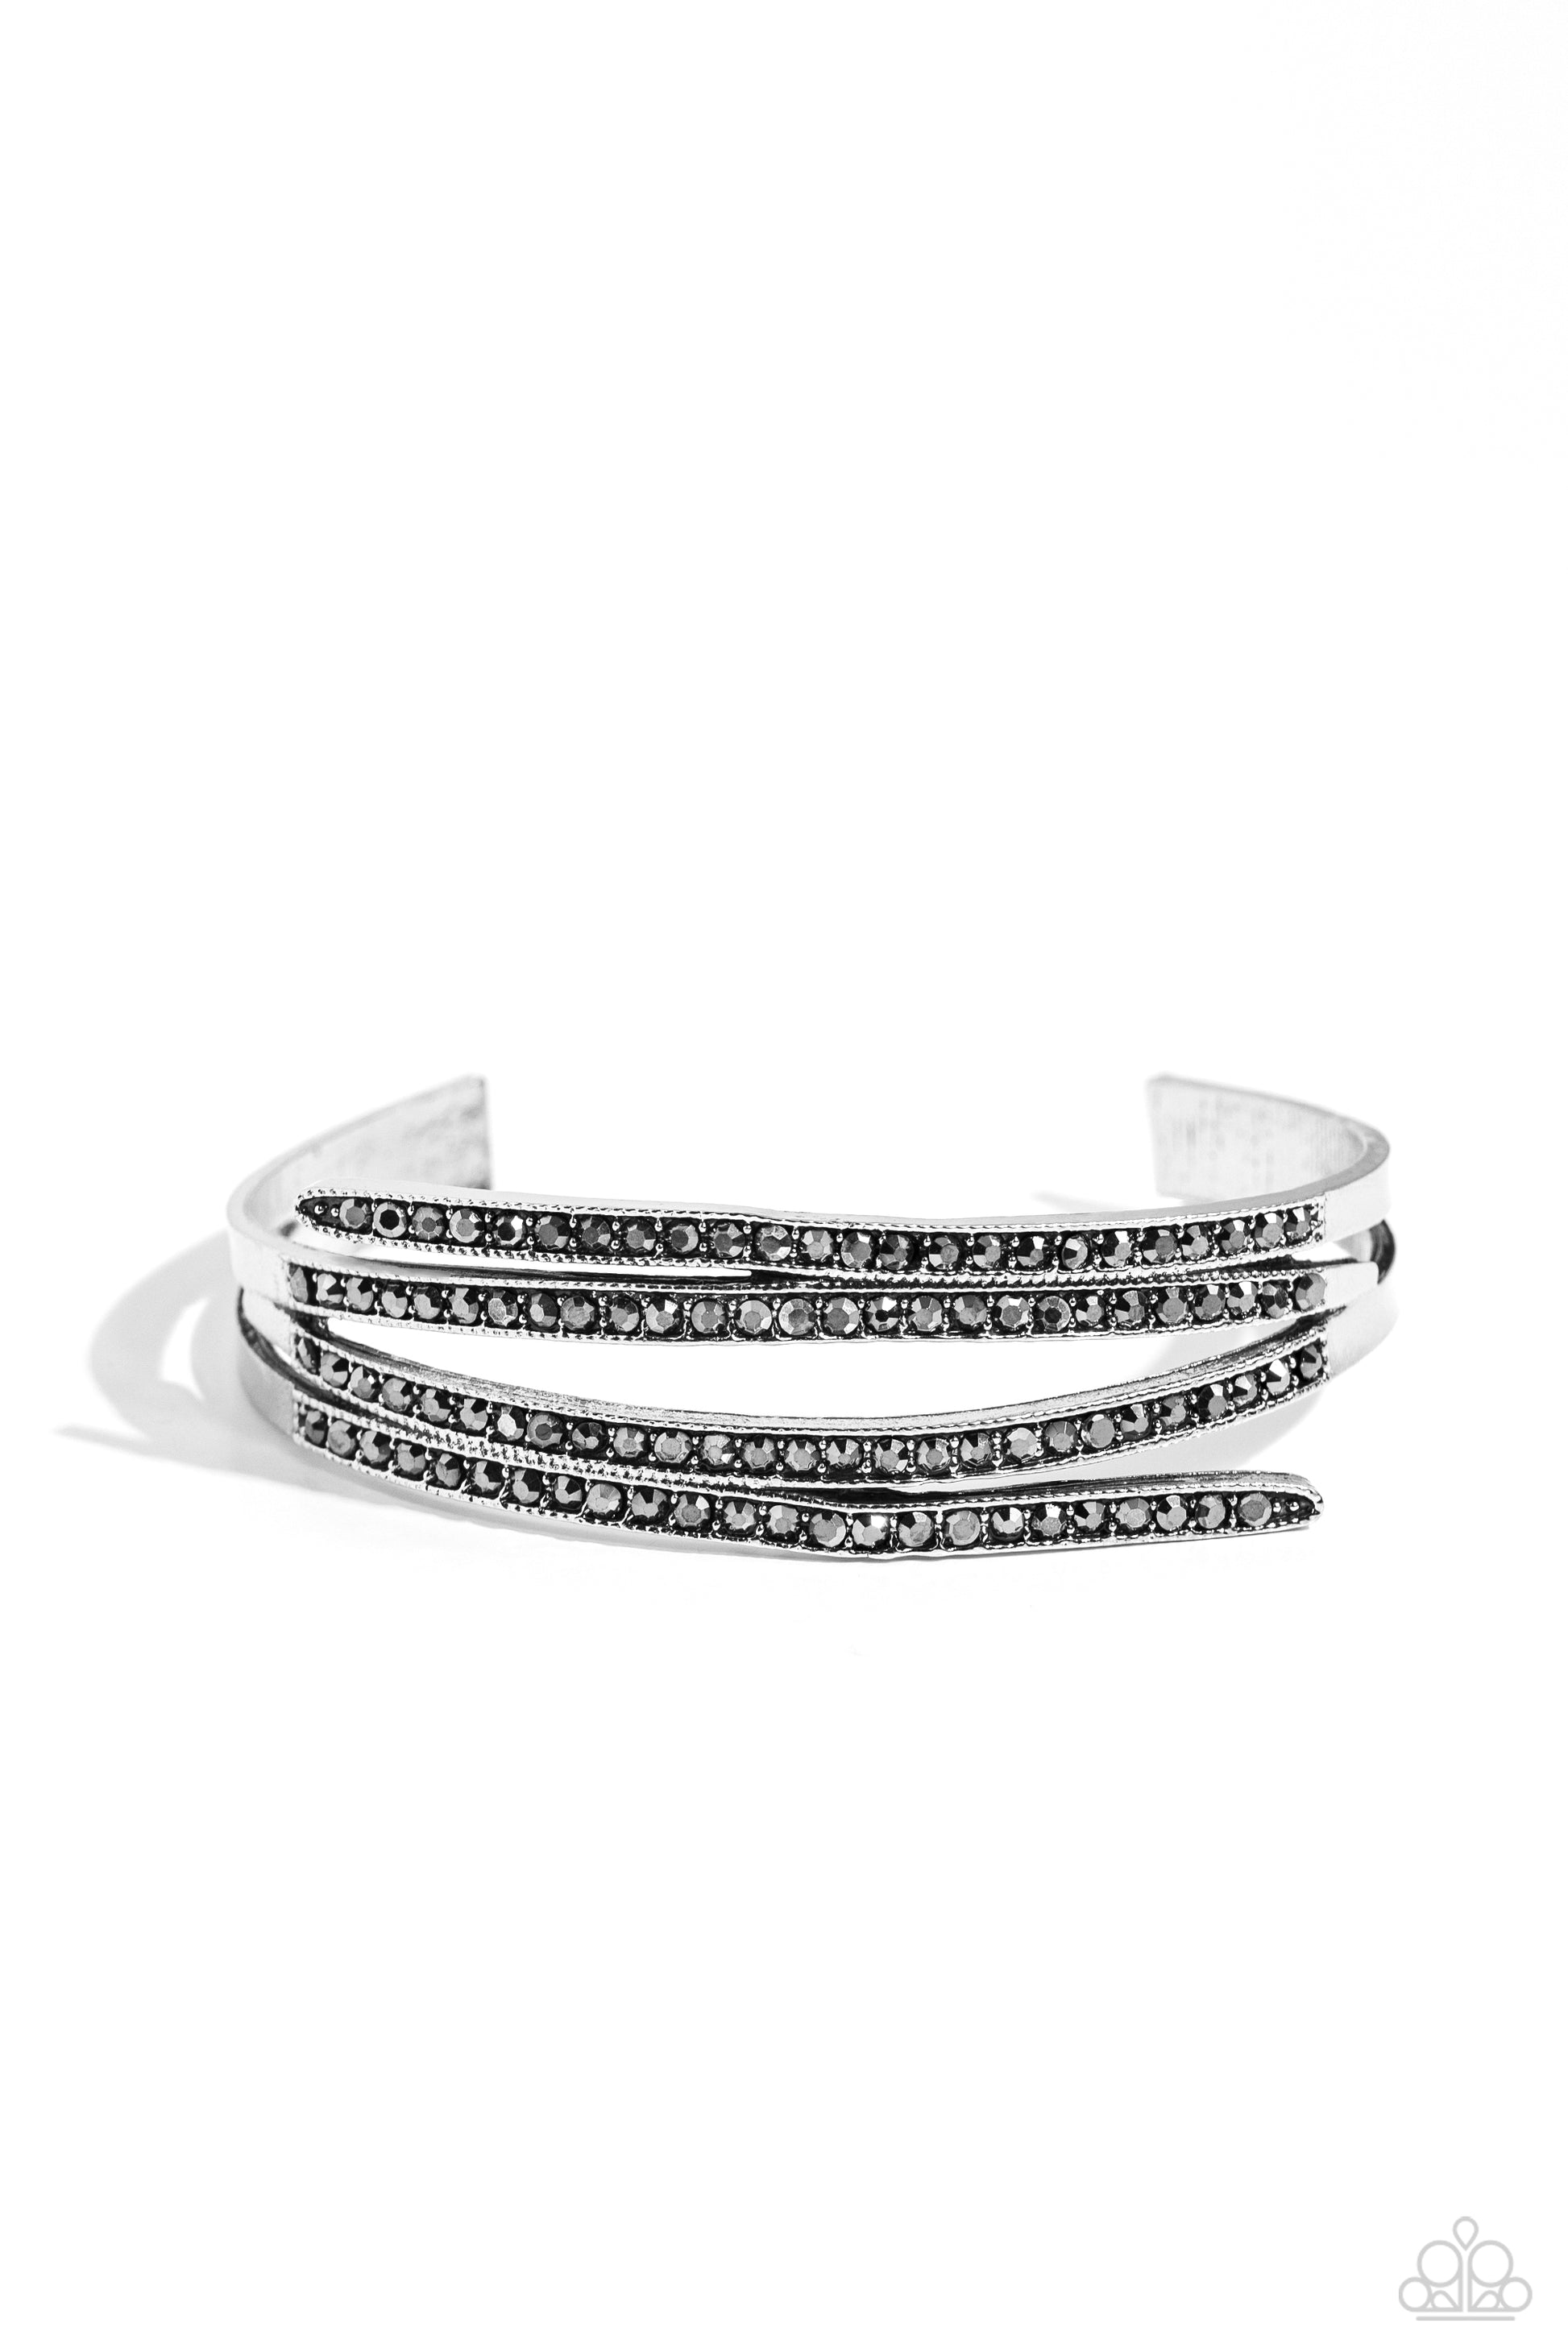 CURVED Lines - silver - Paparazzi bracelet